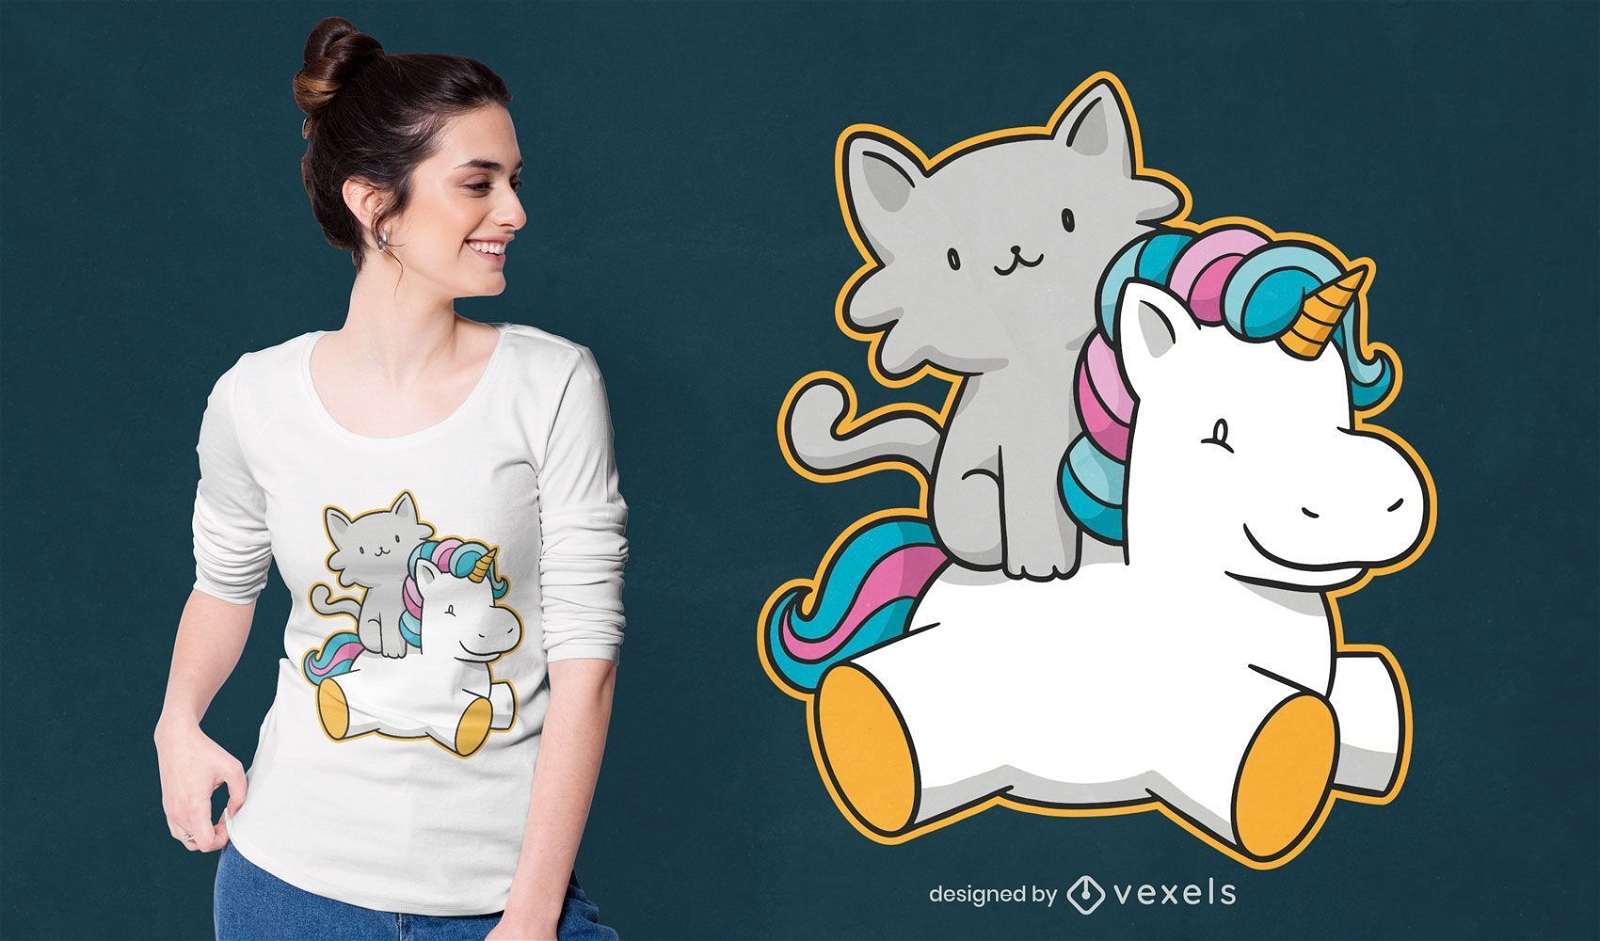 Cat riding unicorn t-shirt design